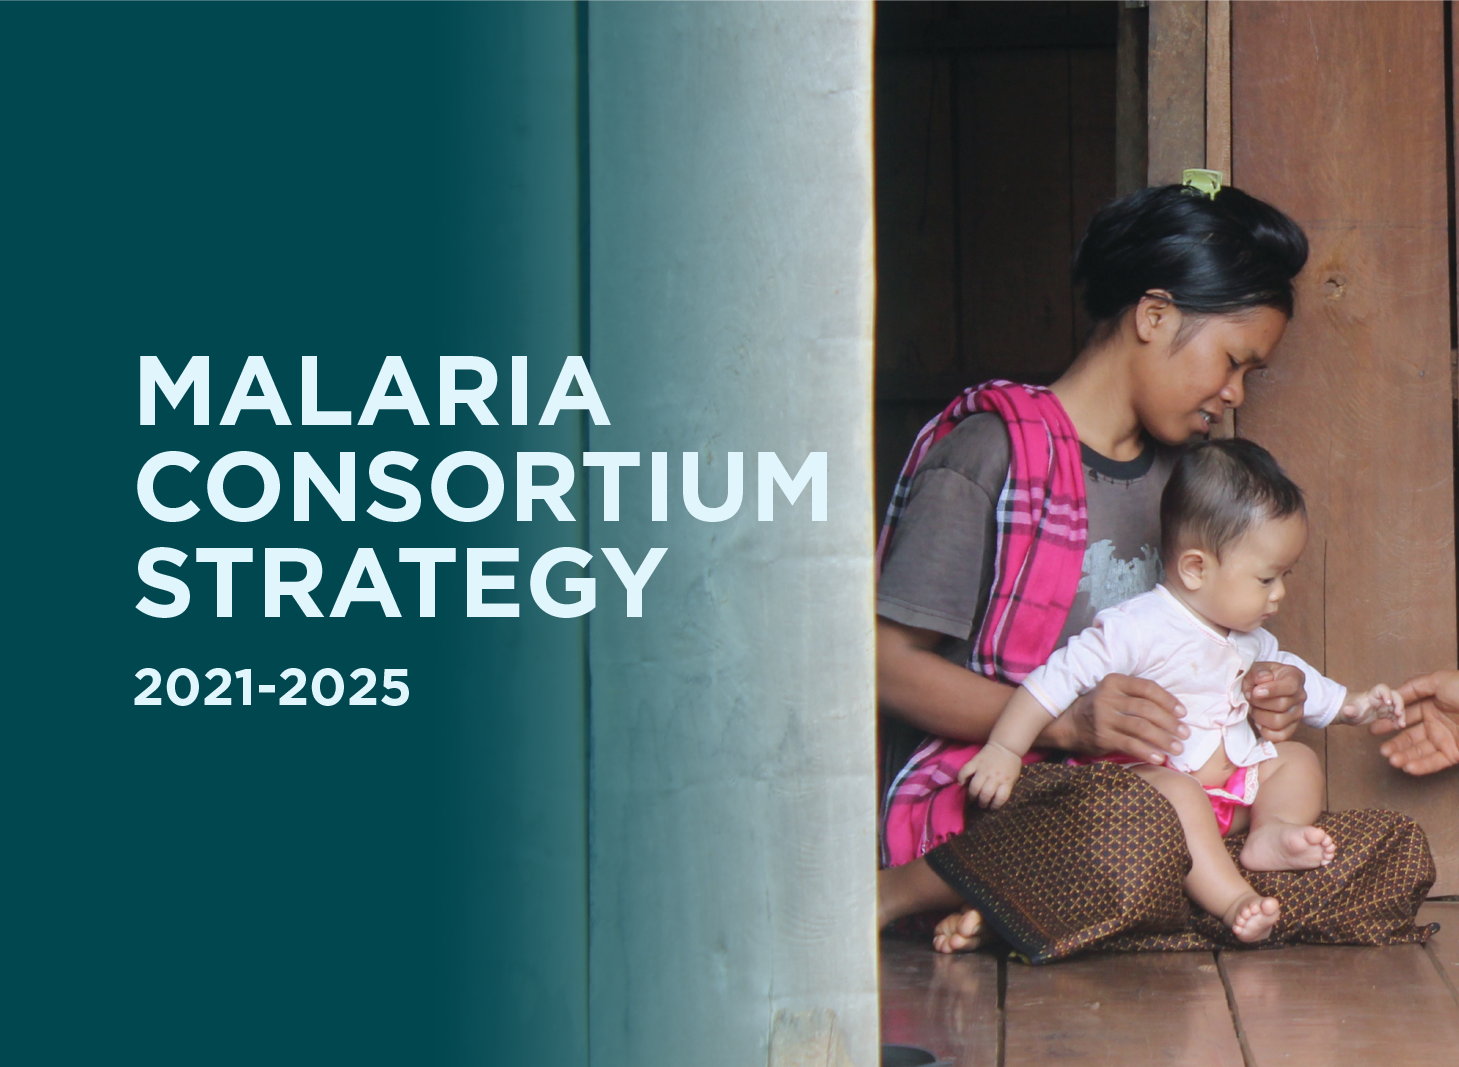 Malaria Consortium Strategy 2021-2025